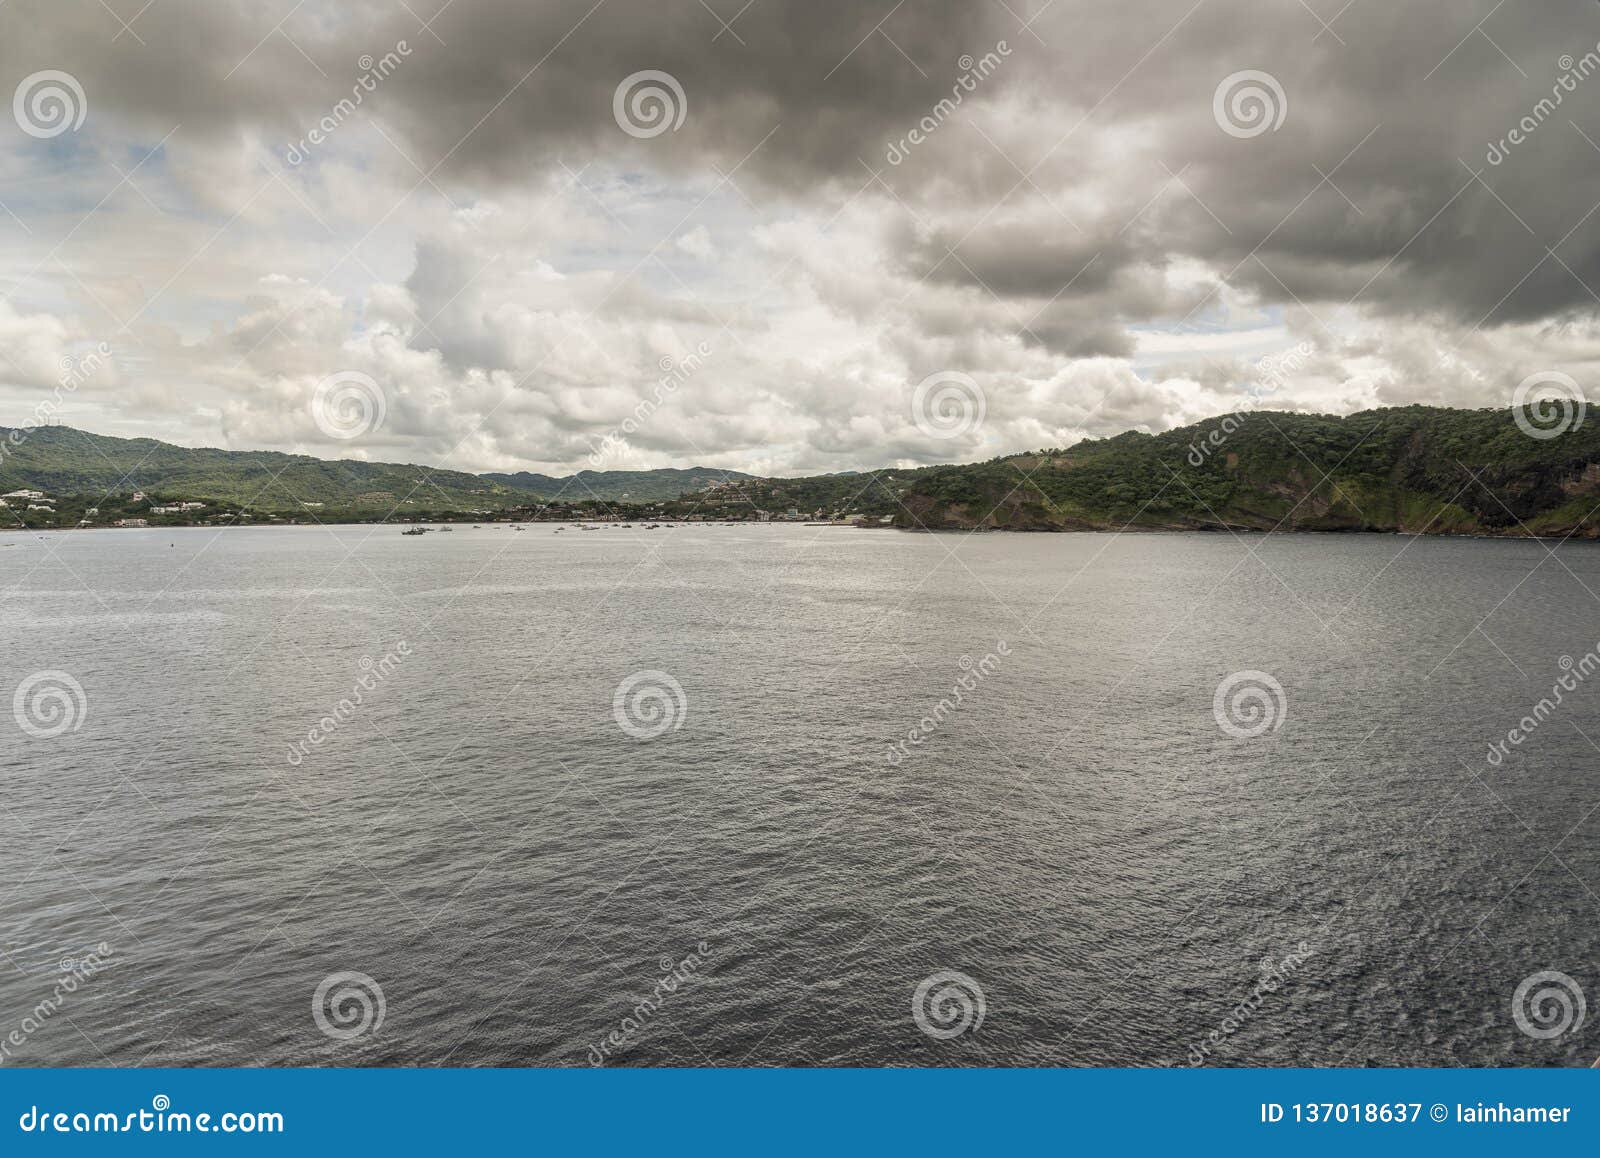 the bay of san juan del sur nicaragua from island princess